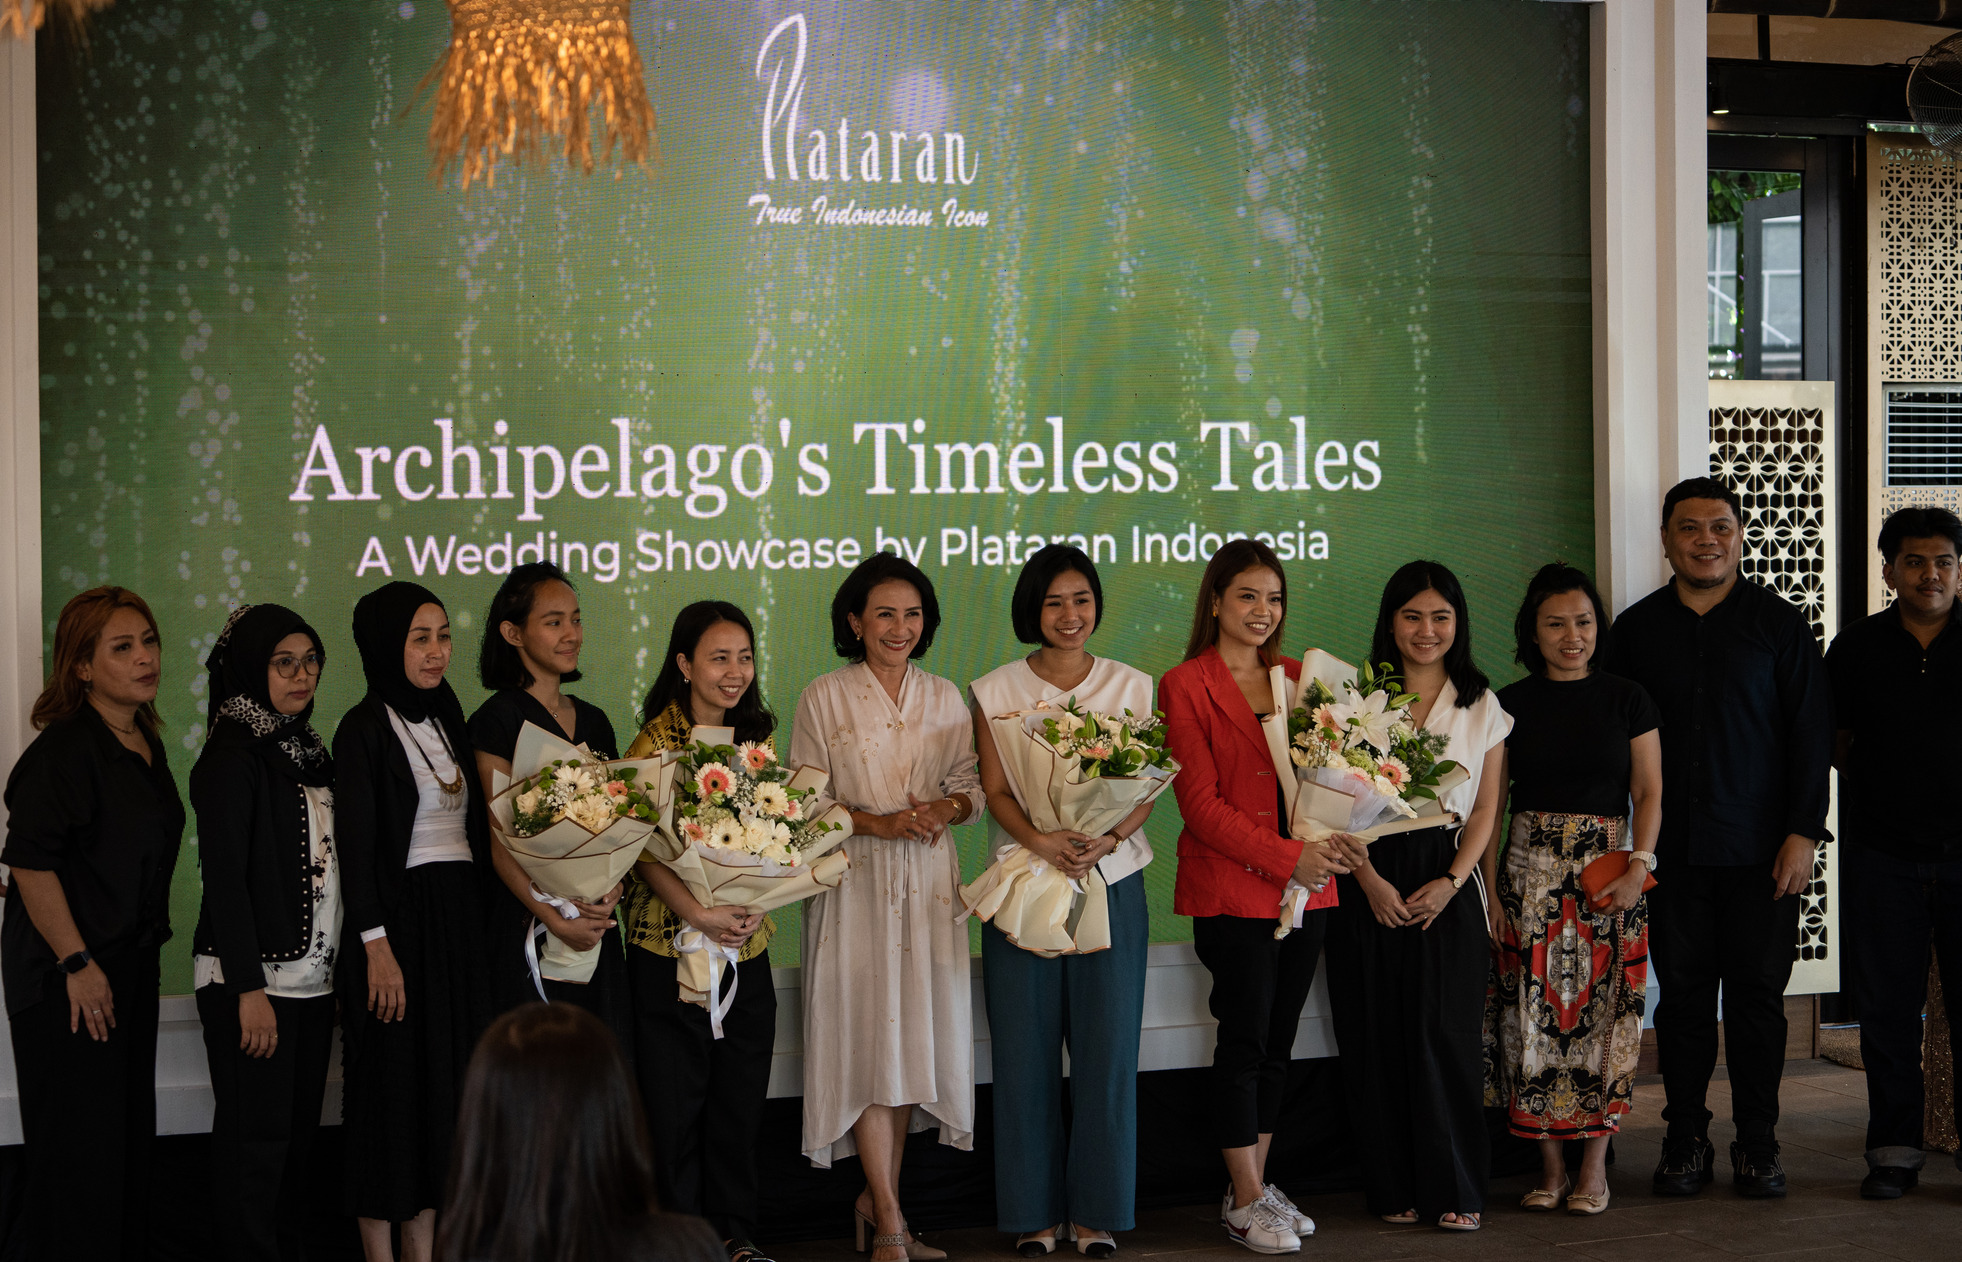 Archipelago’s Timeless Tales – A Wedding Showcase at Hutan Kota by Plataran